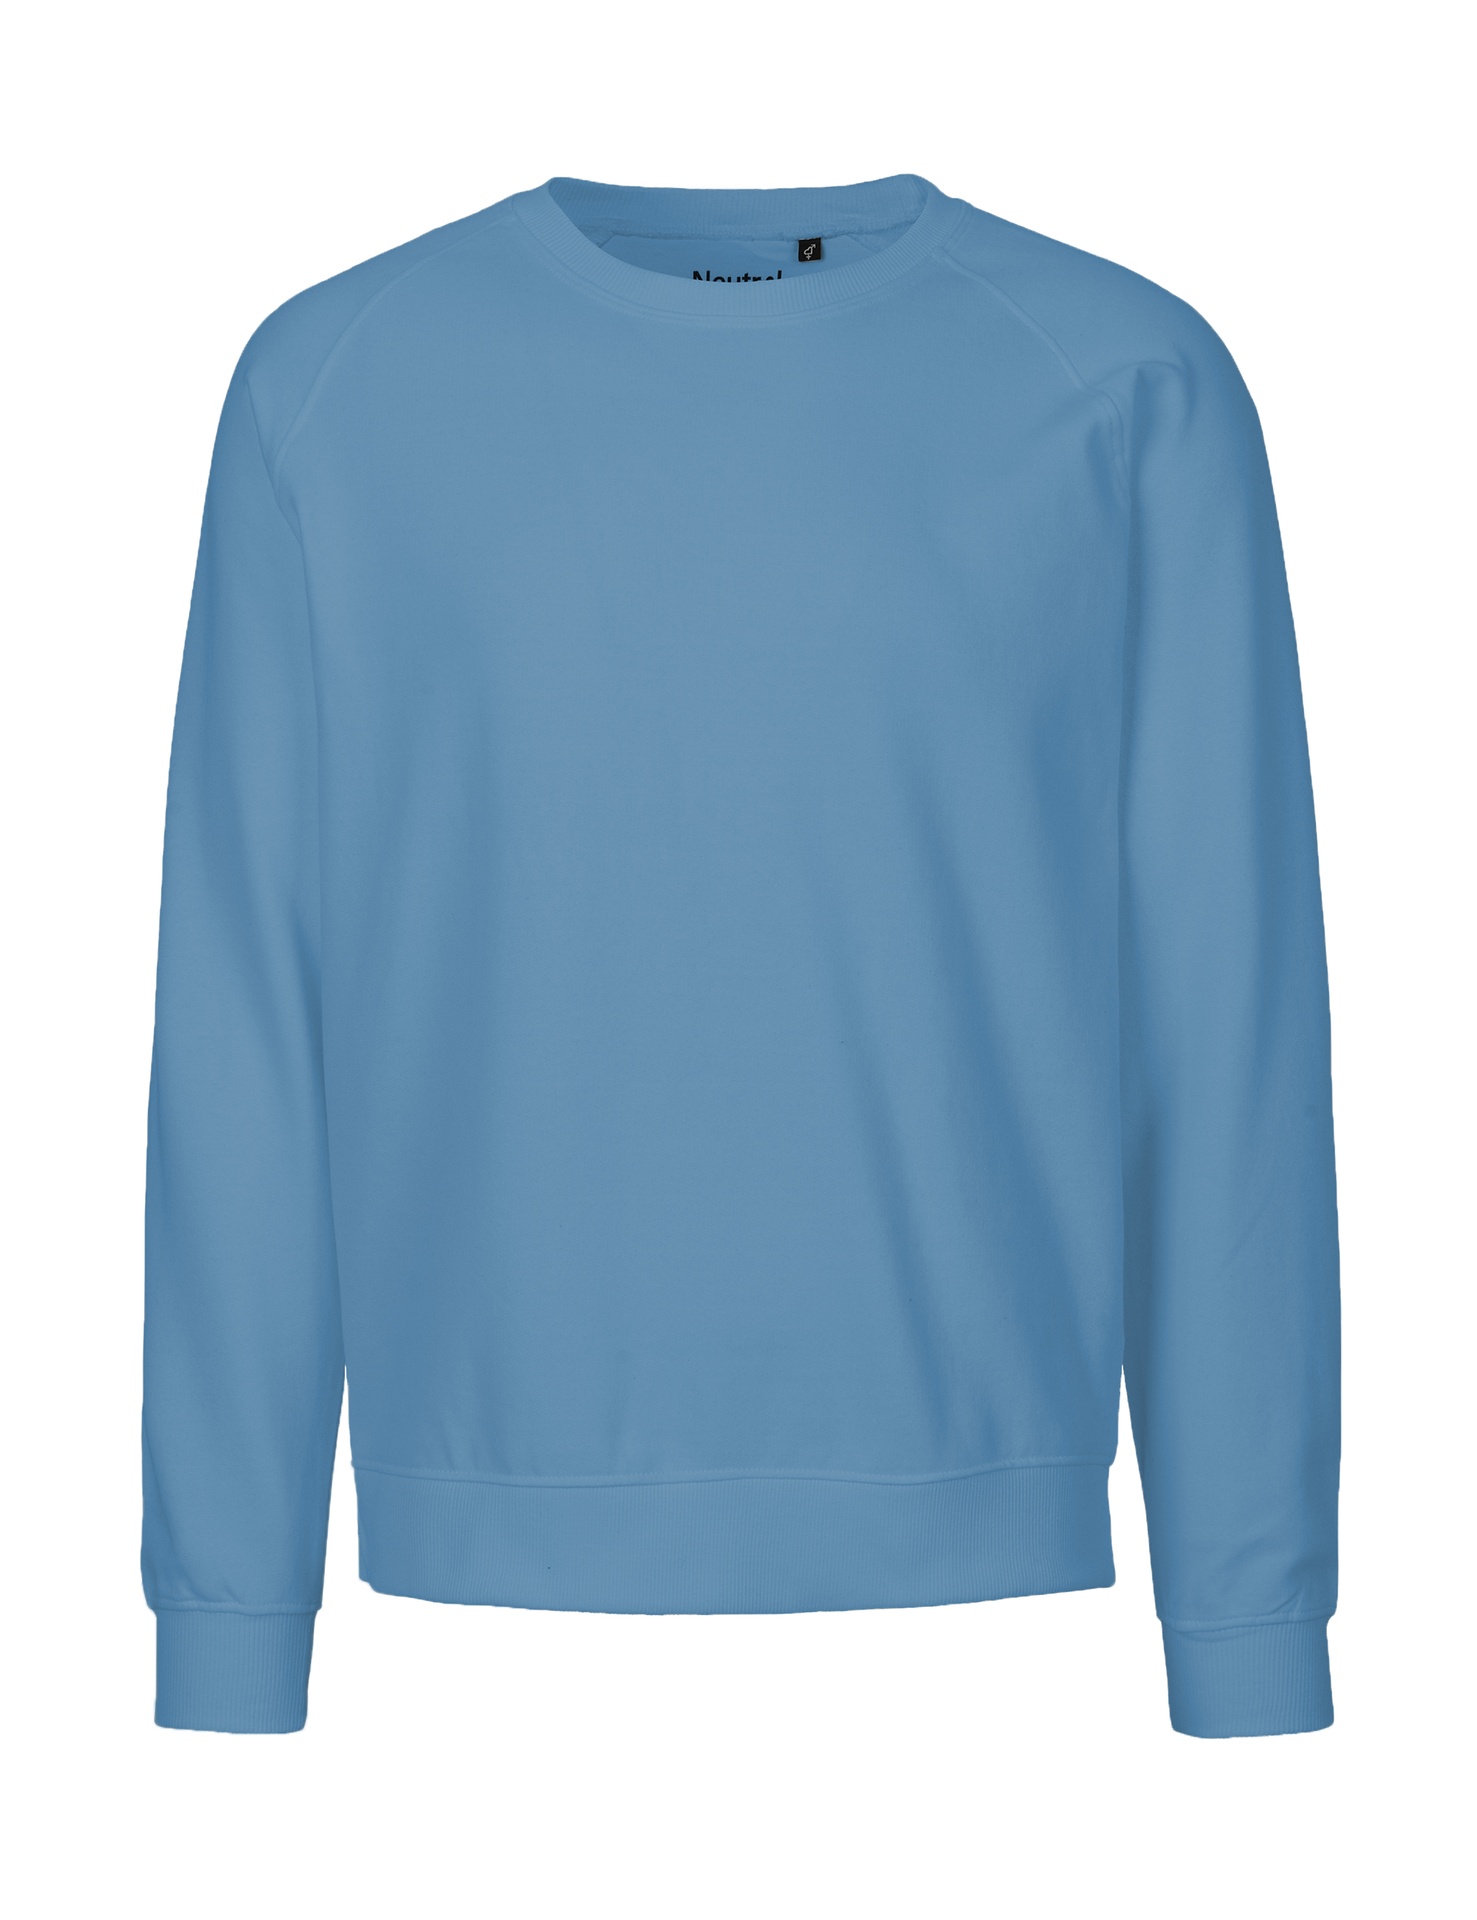 [PR/02839] Unisex Sweatshirt (Dusty Indigo 41, 4XL)